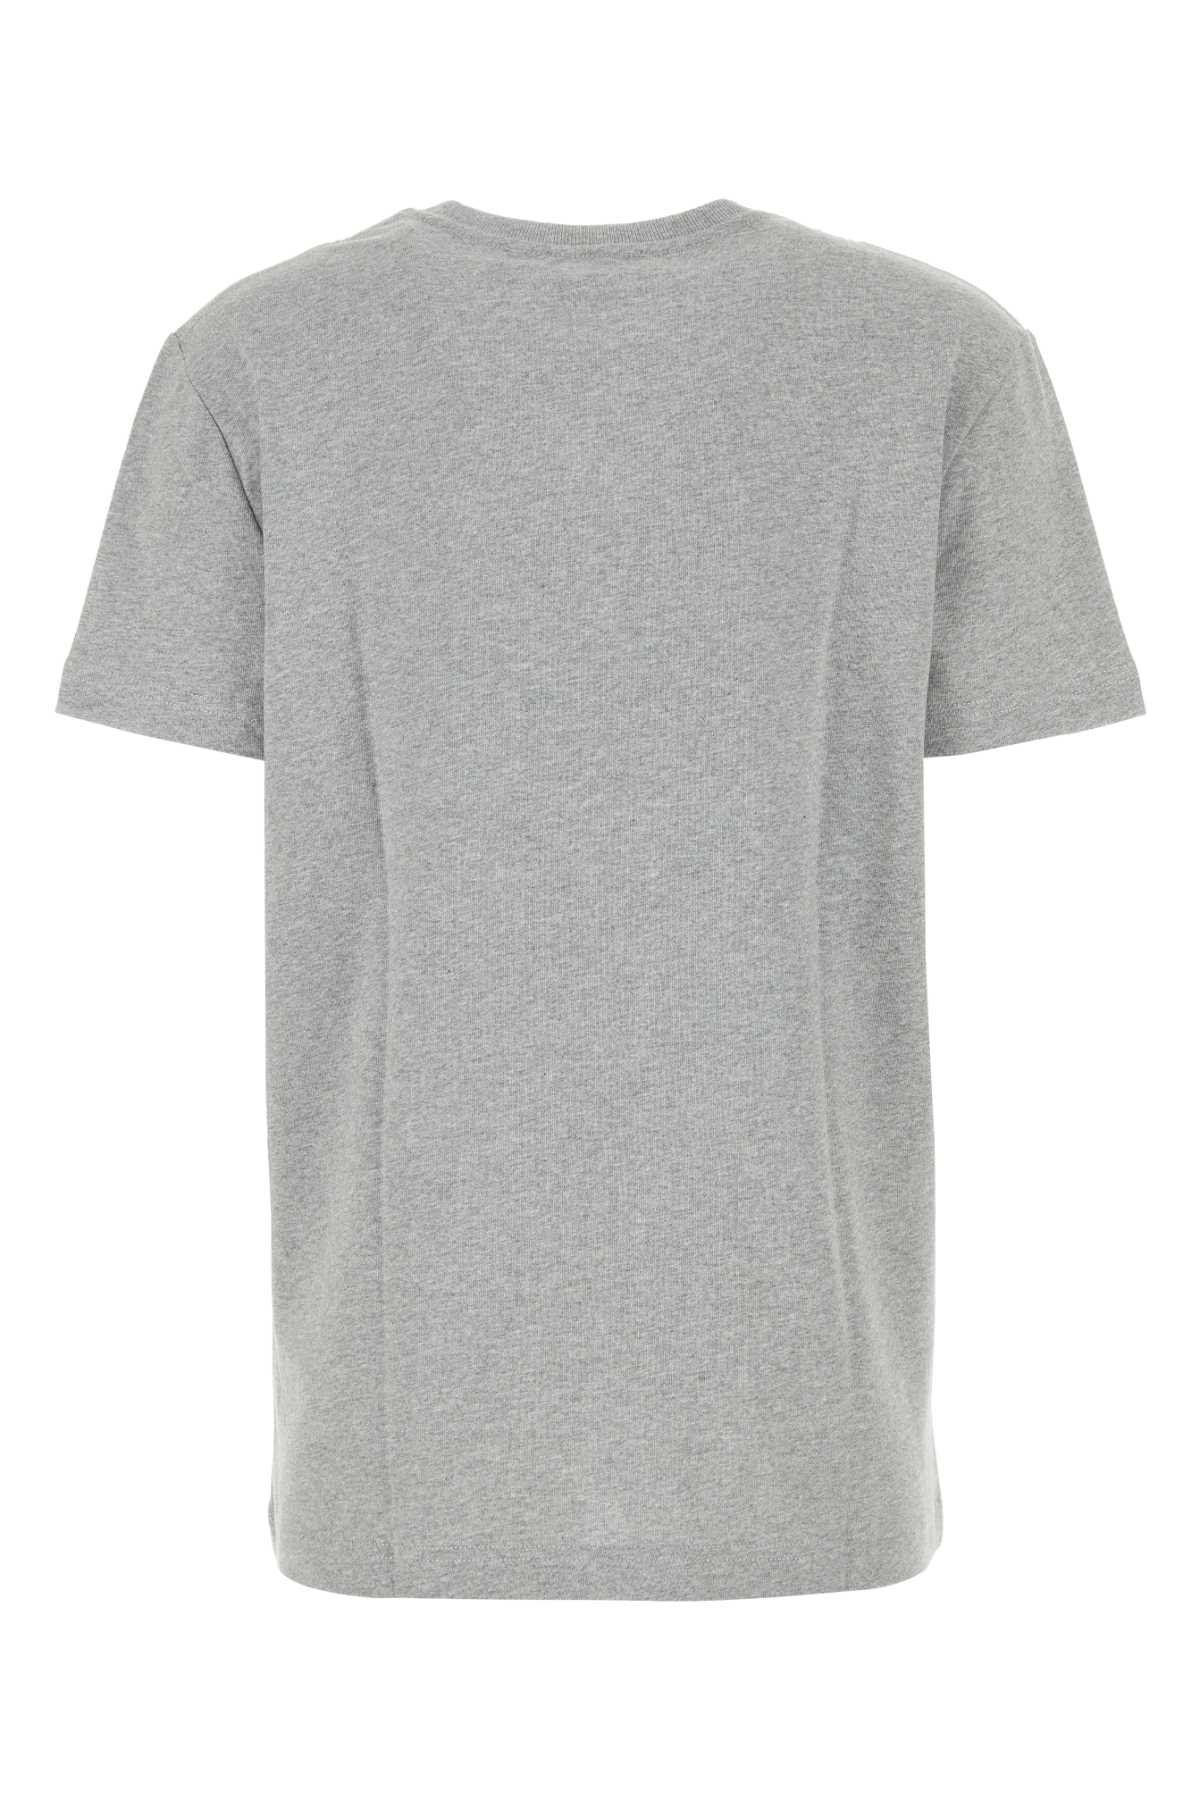 Apc Grey Cotton T-shirt In Grisfoncechine